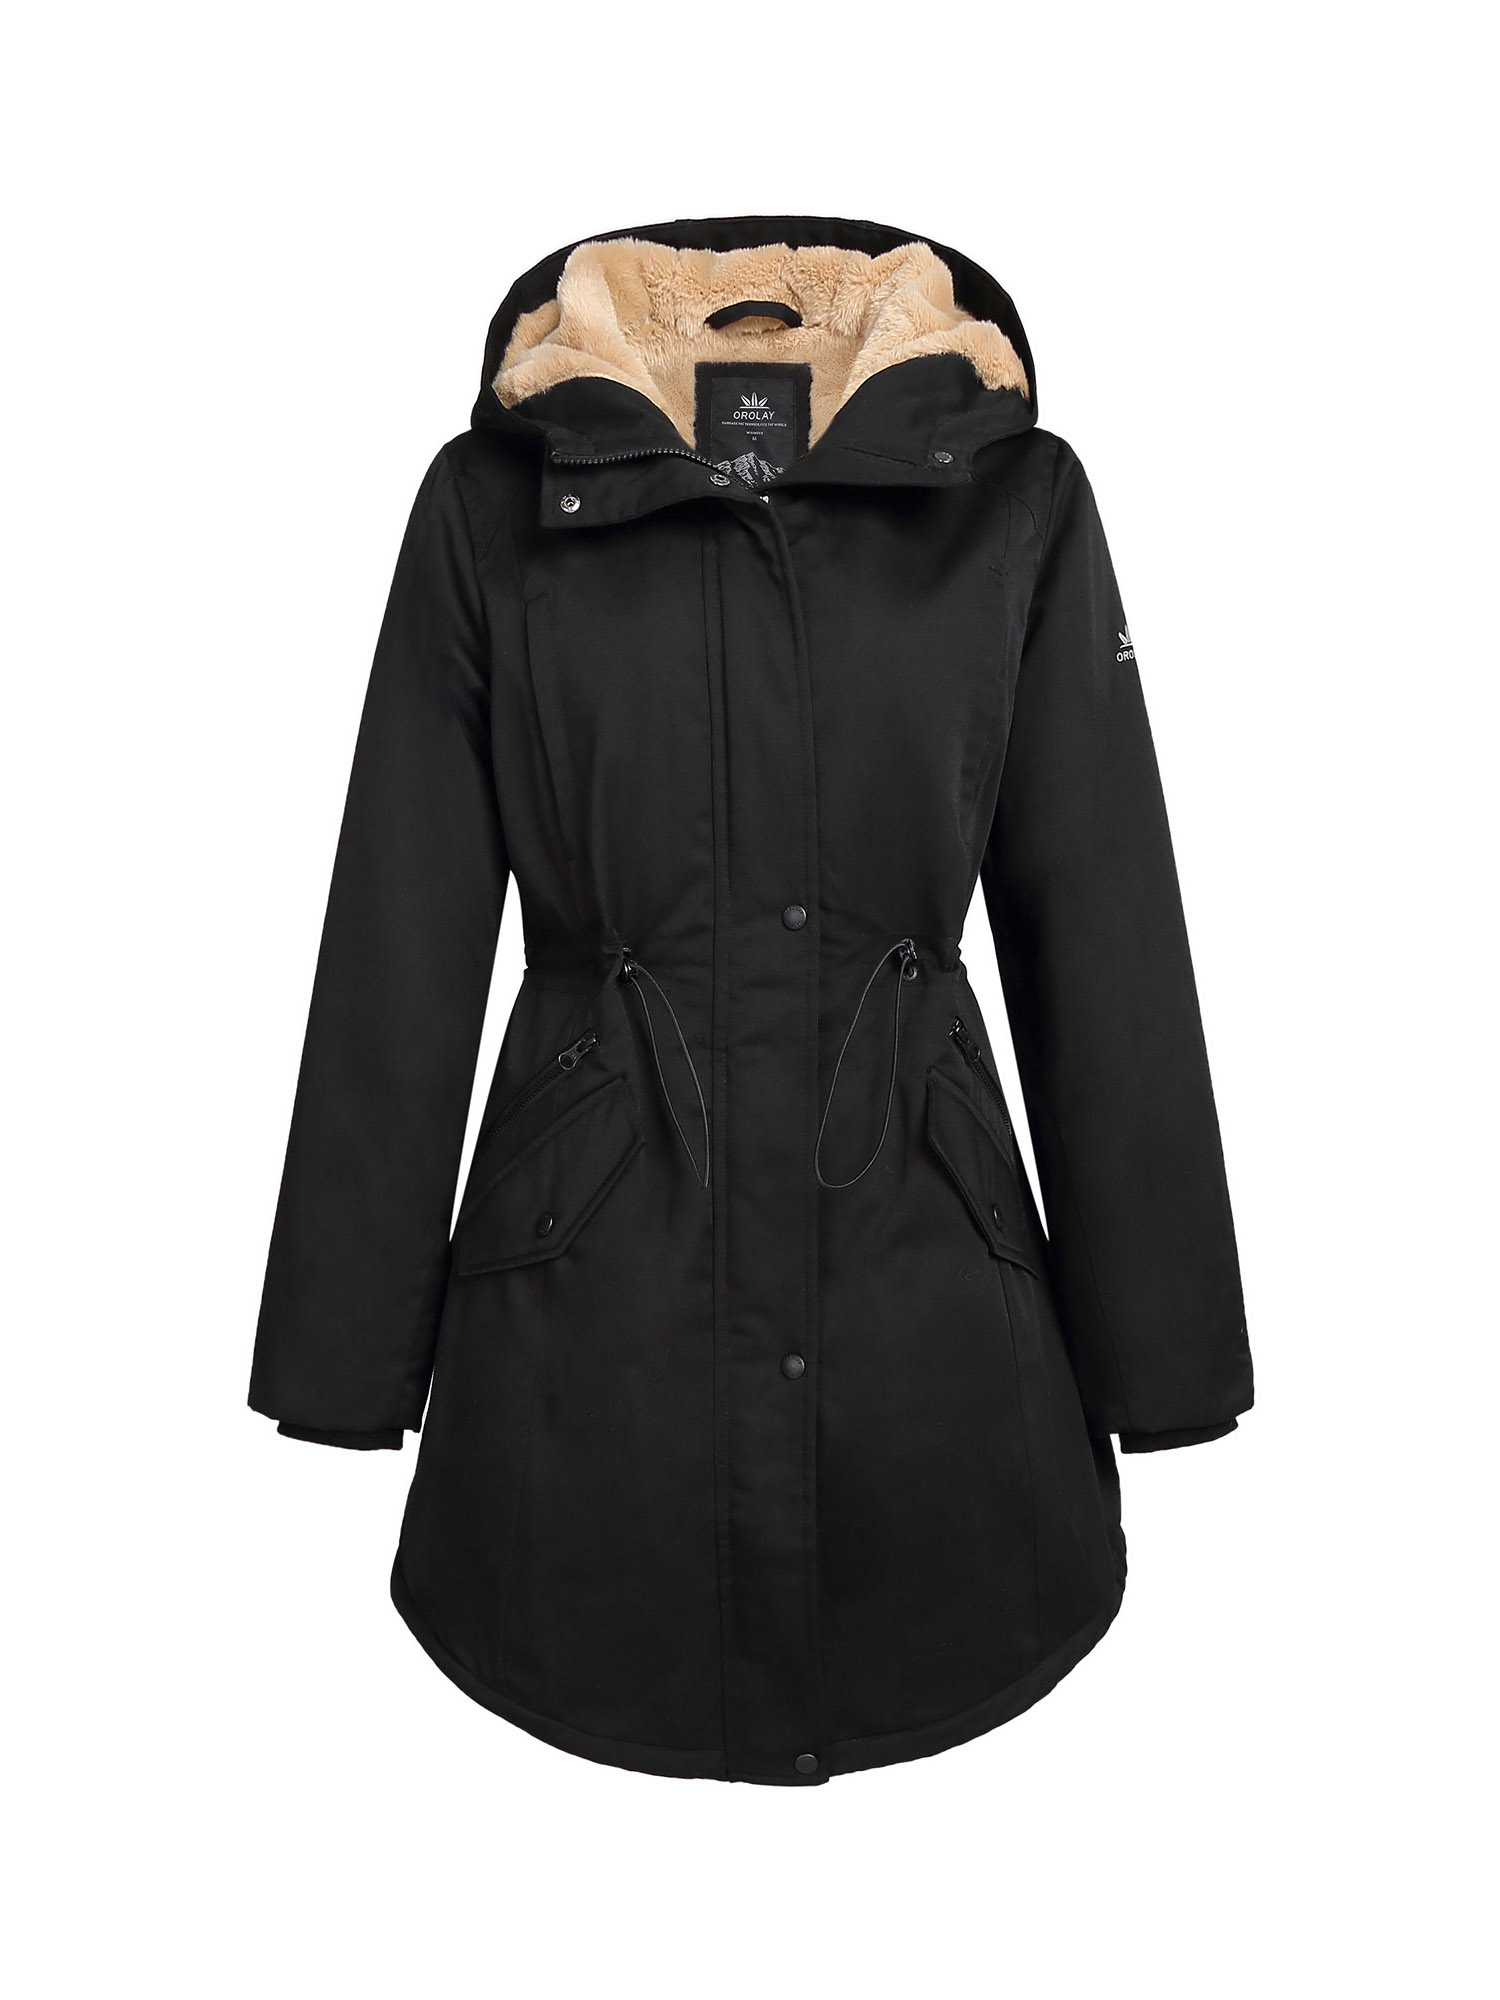 Orolay Women's Winter Parka Fleece Parka Warm Winter Coat Hoodie Jacket Mid length Winter Jacket Black M - image 1 of 5